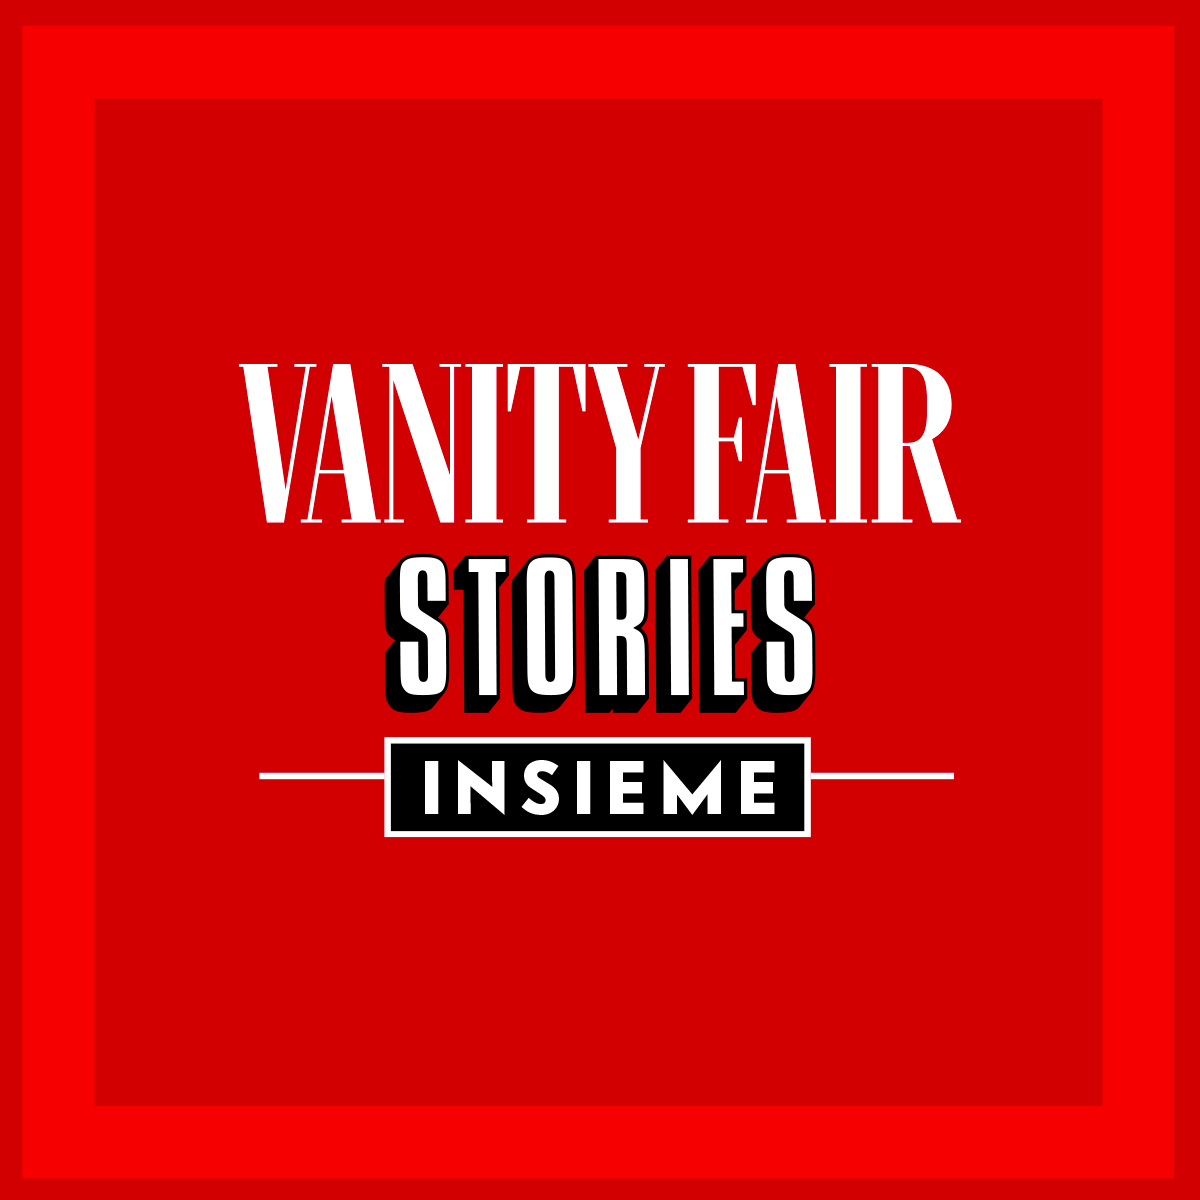 Vanity Fair Stories torna a Milano dal 26 al 28/11 in versione ibrida. Skoda è il main partner